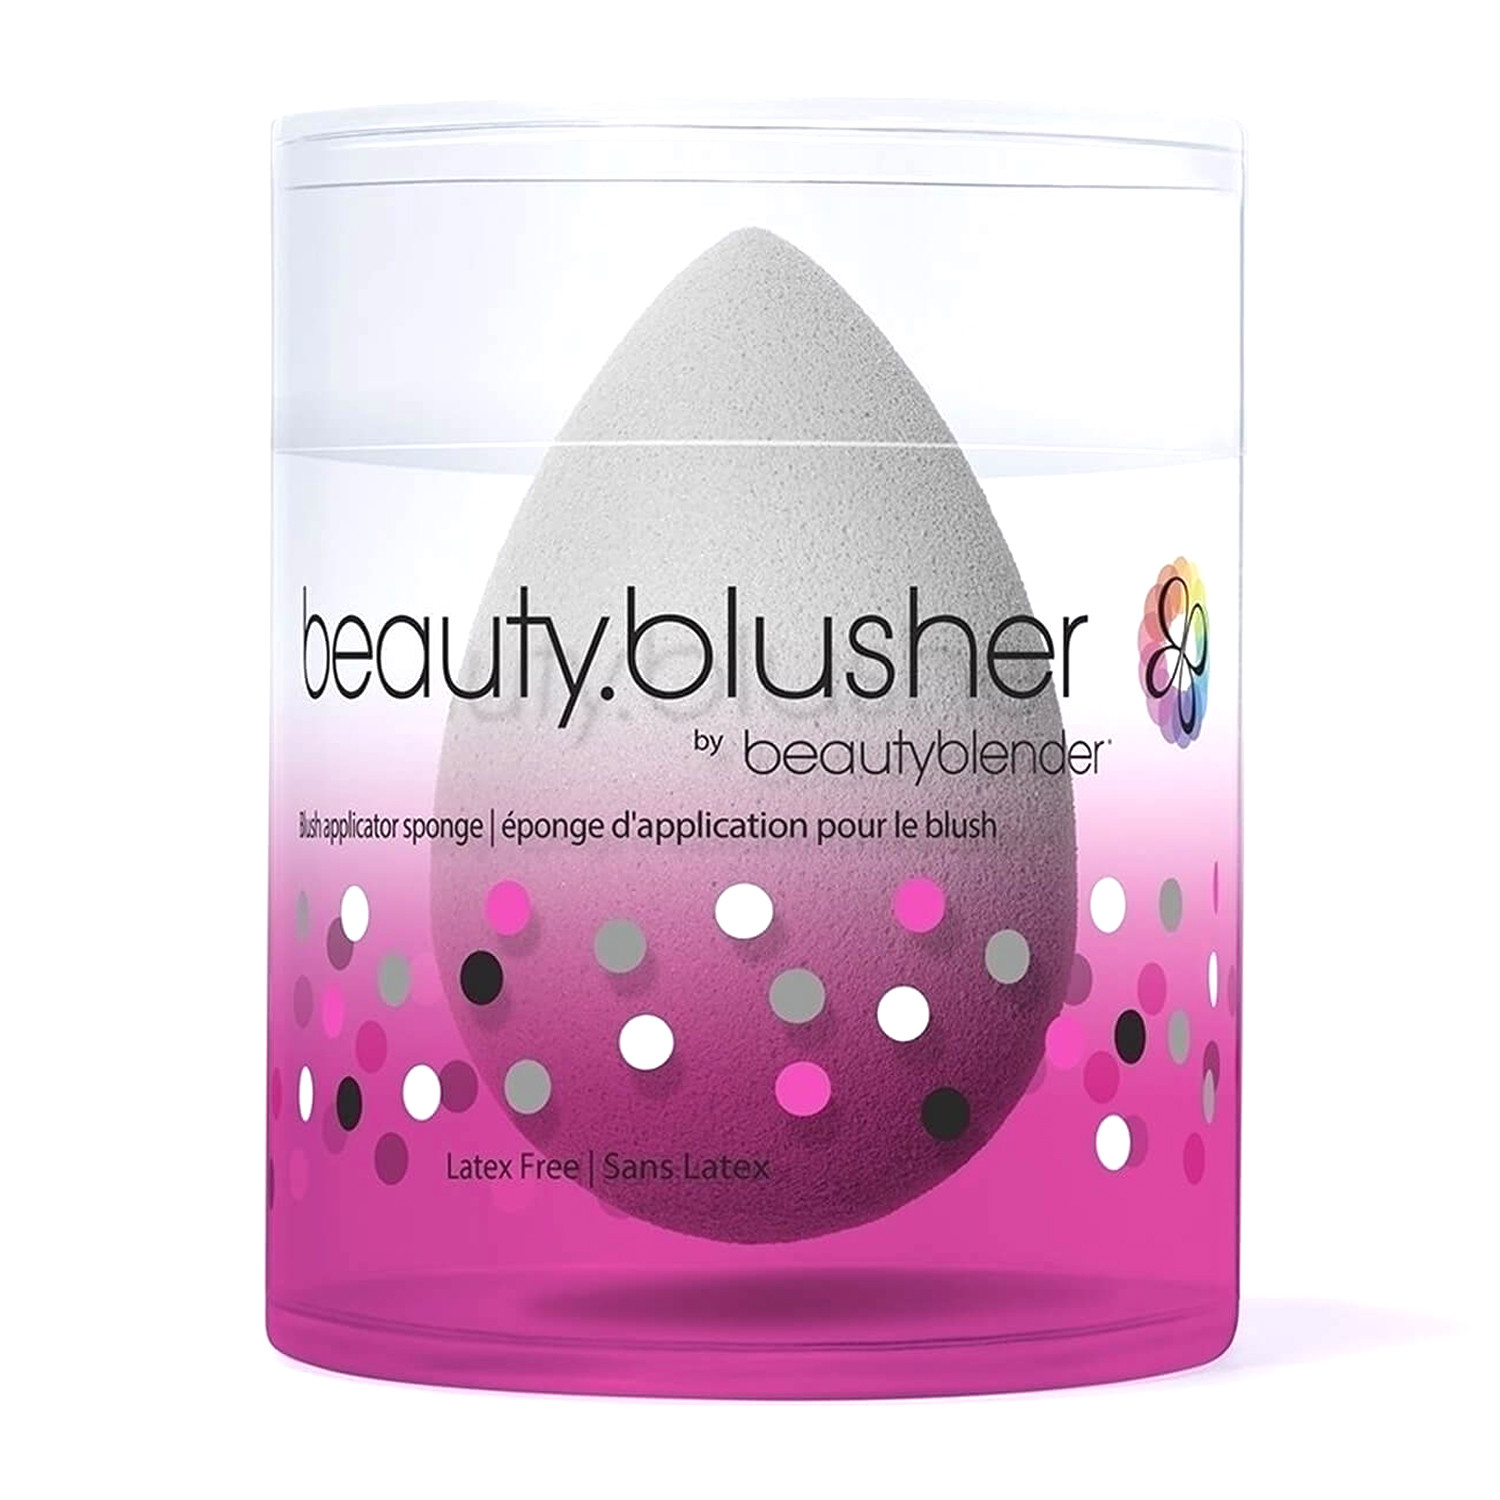 Beautyblender Beauty.blusher - Спонж для макияжа